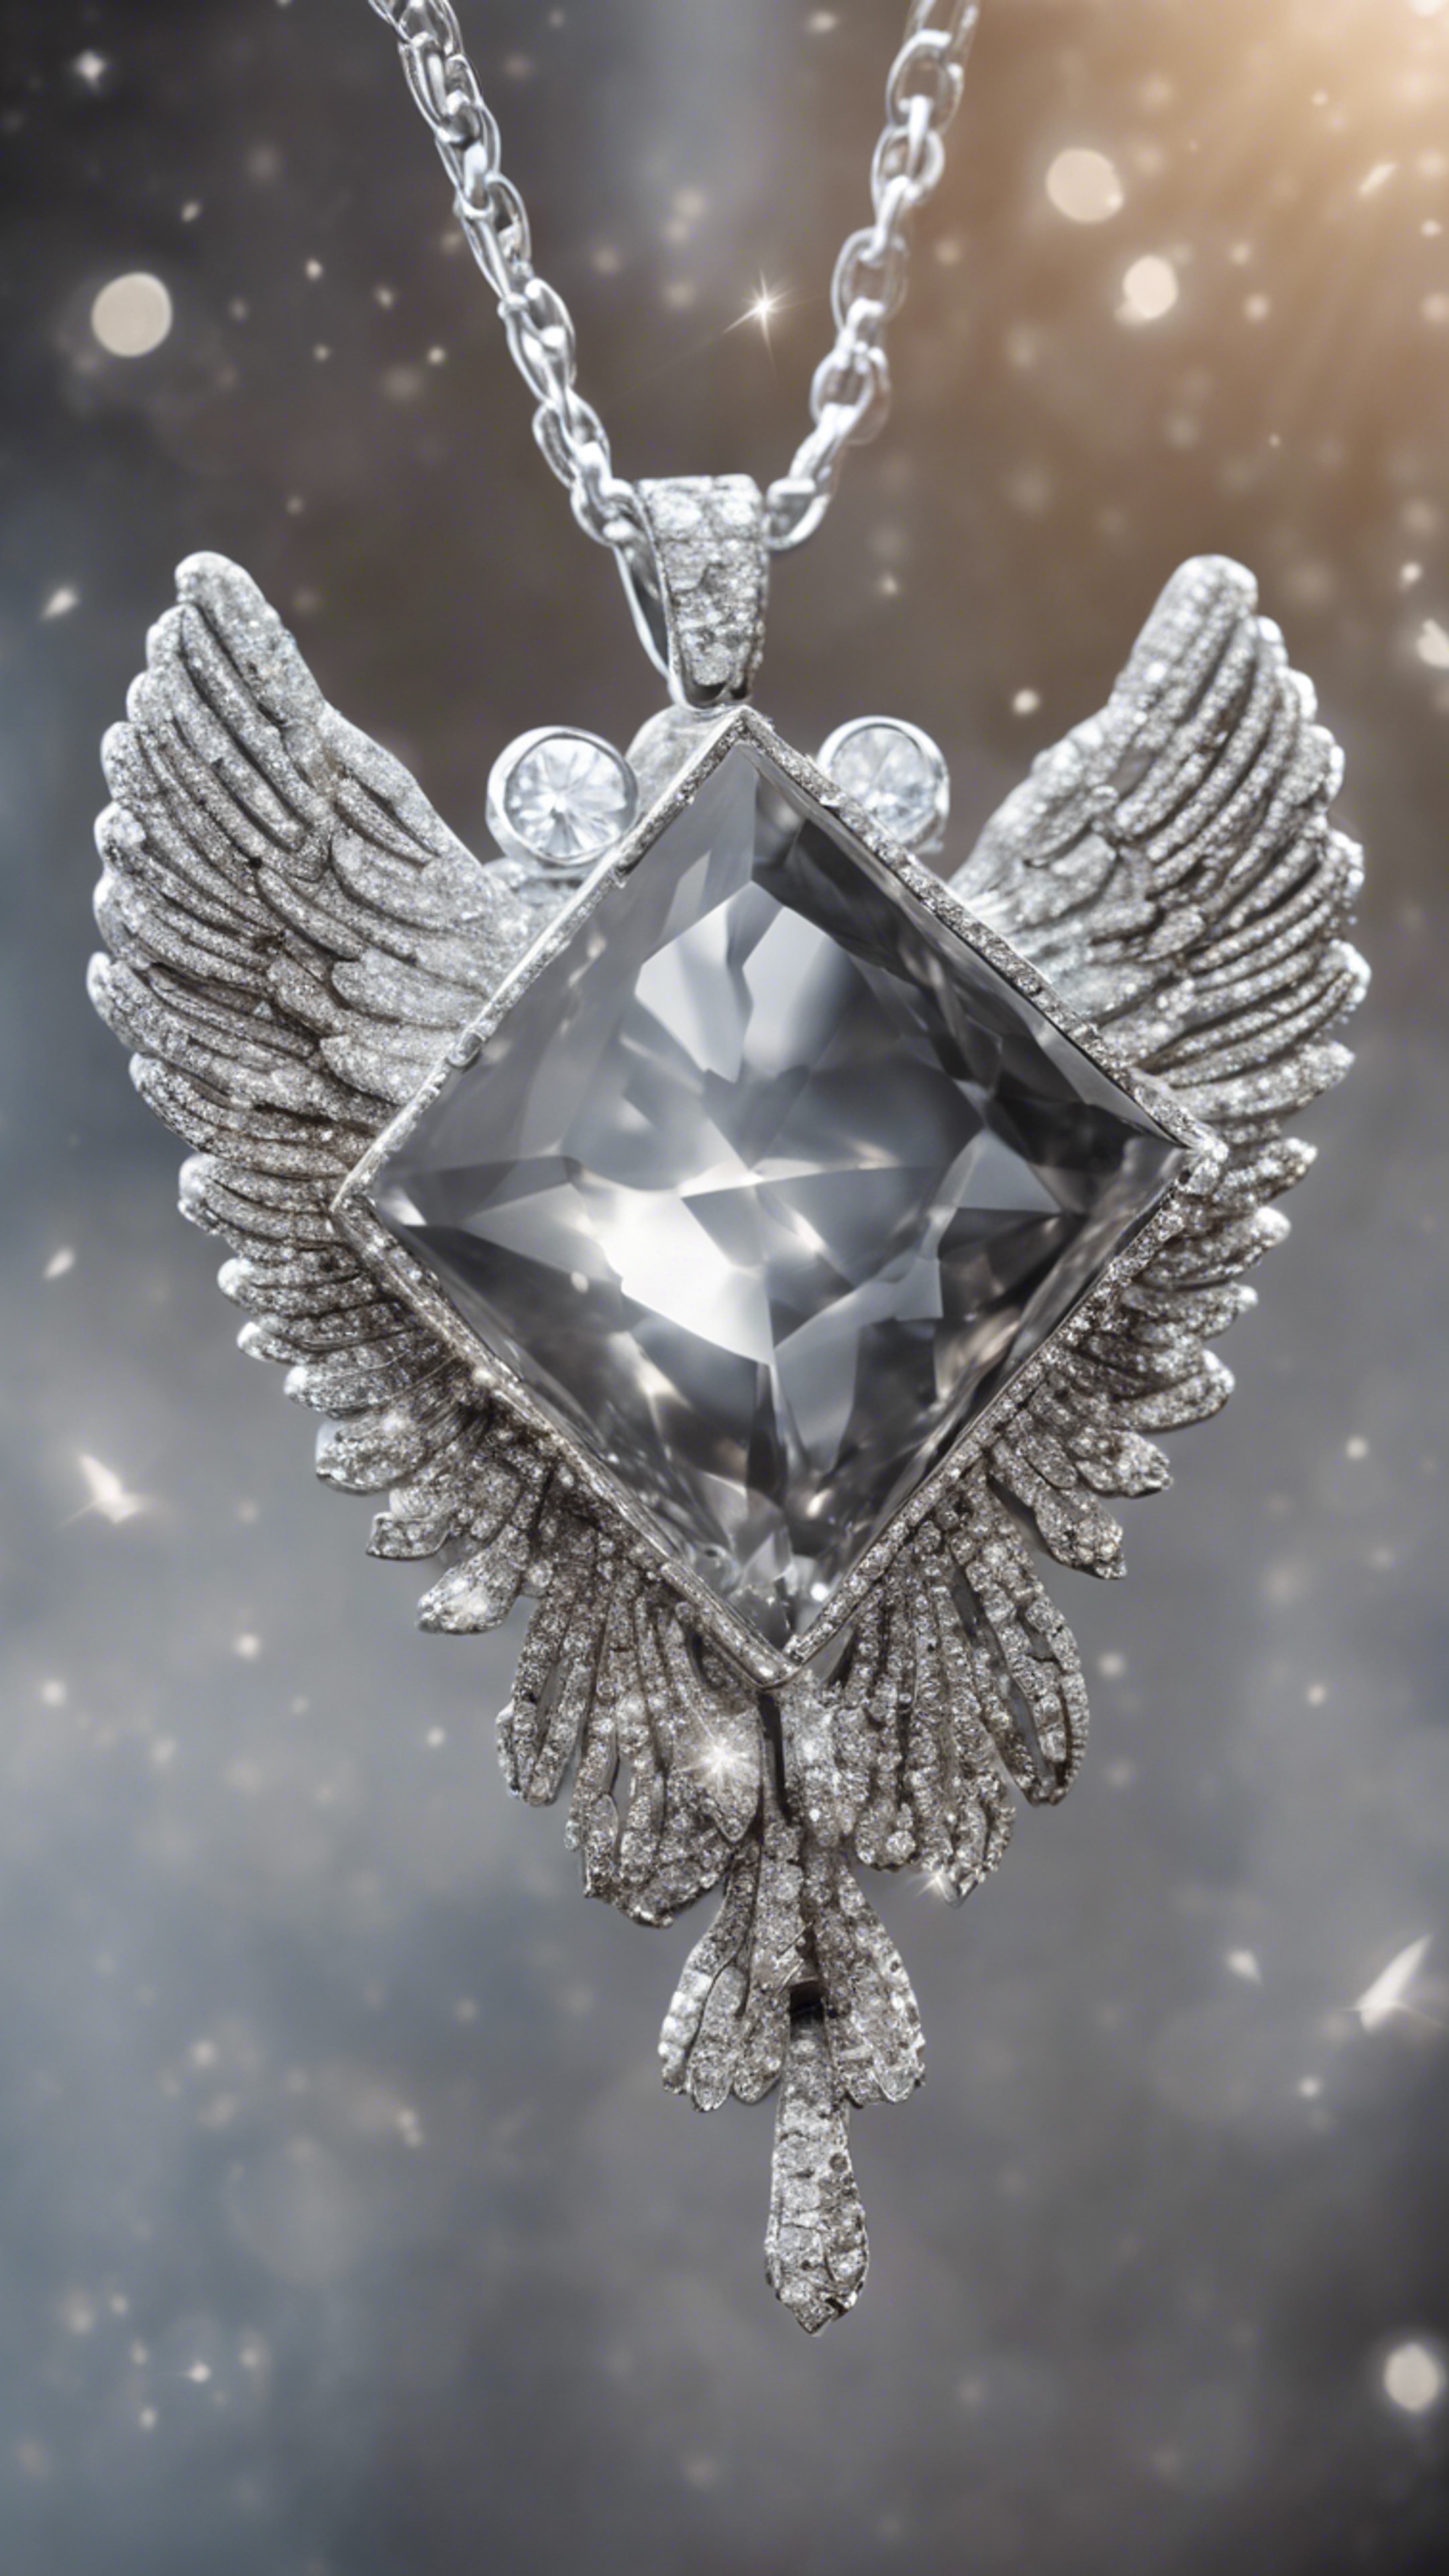 A gray diamond wrapped in the wings of a silver angel pendant.壁紙[ad1b9e387c144e34b8b5]